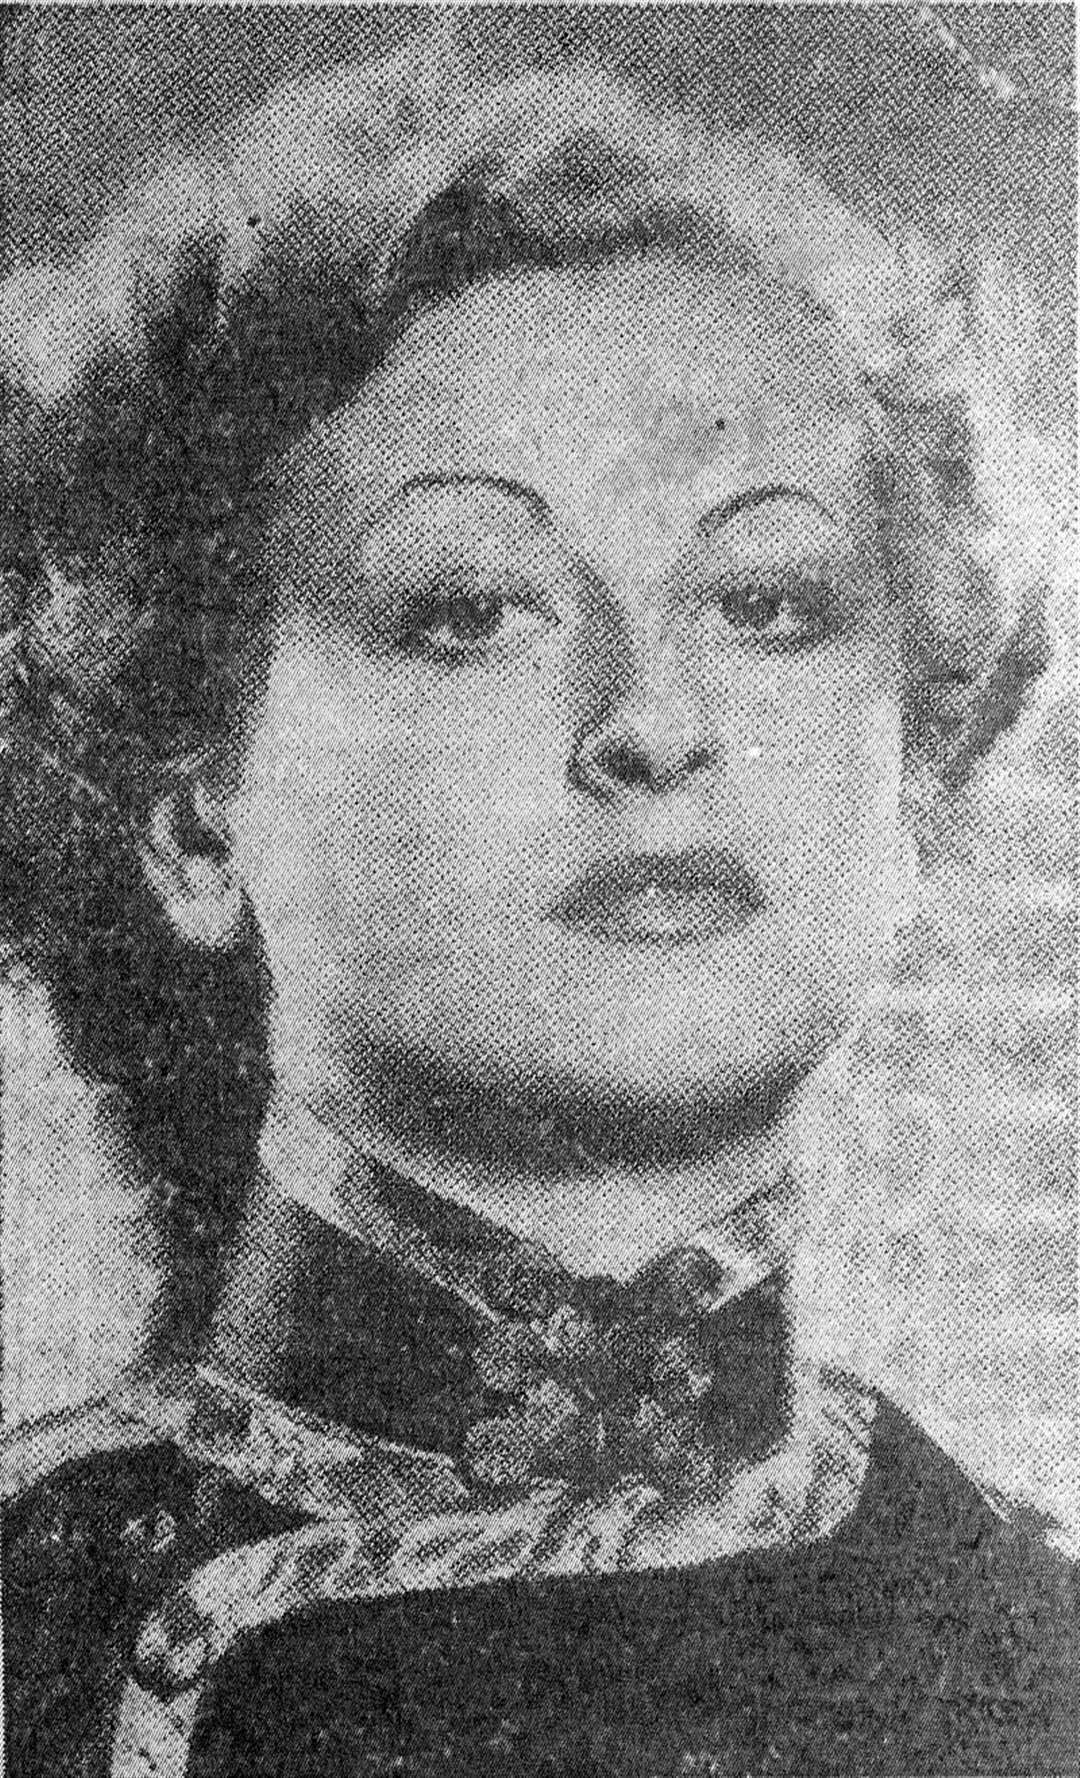 Cissie Hill wearing a cheongsam dress in 1937